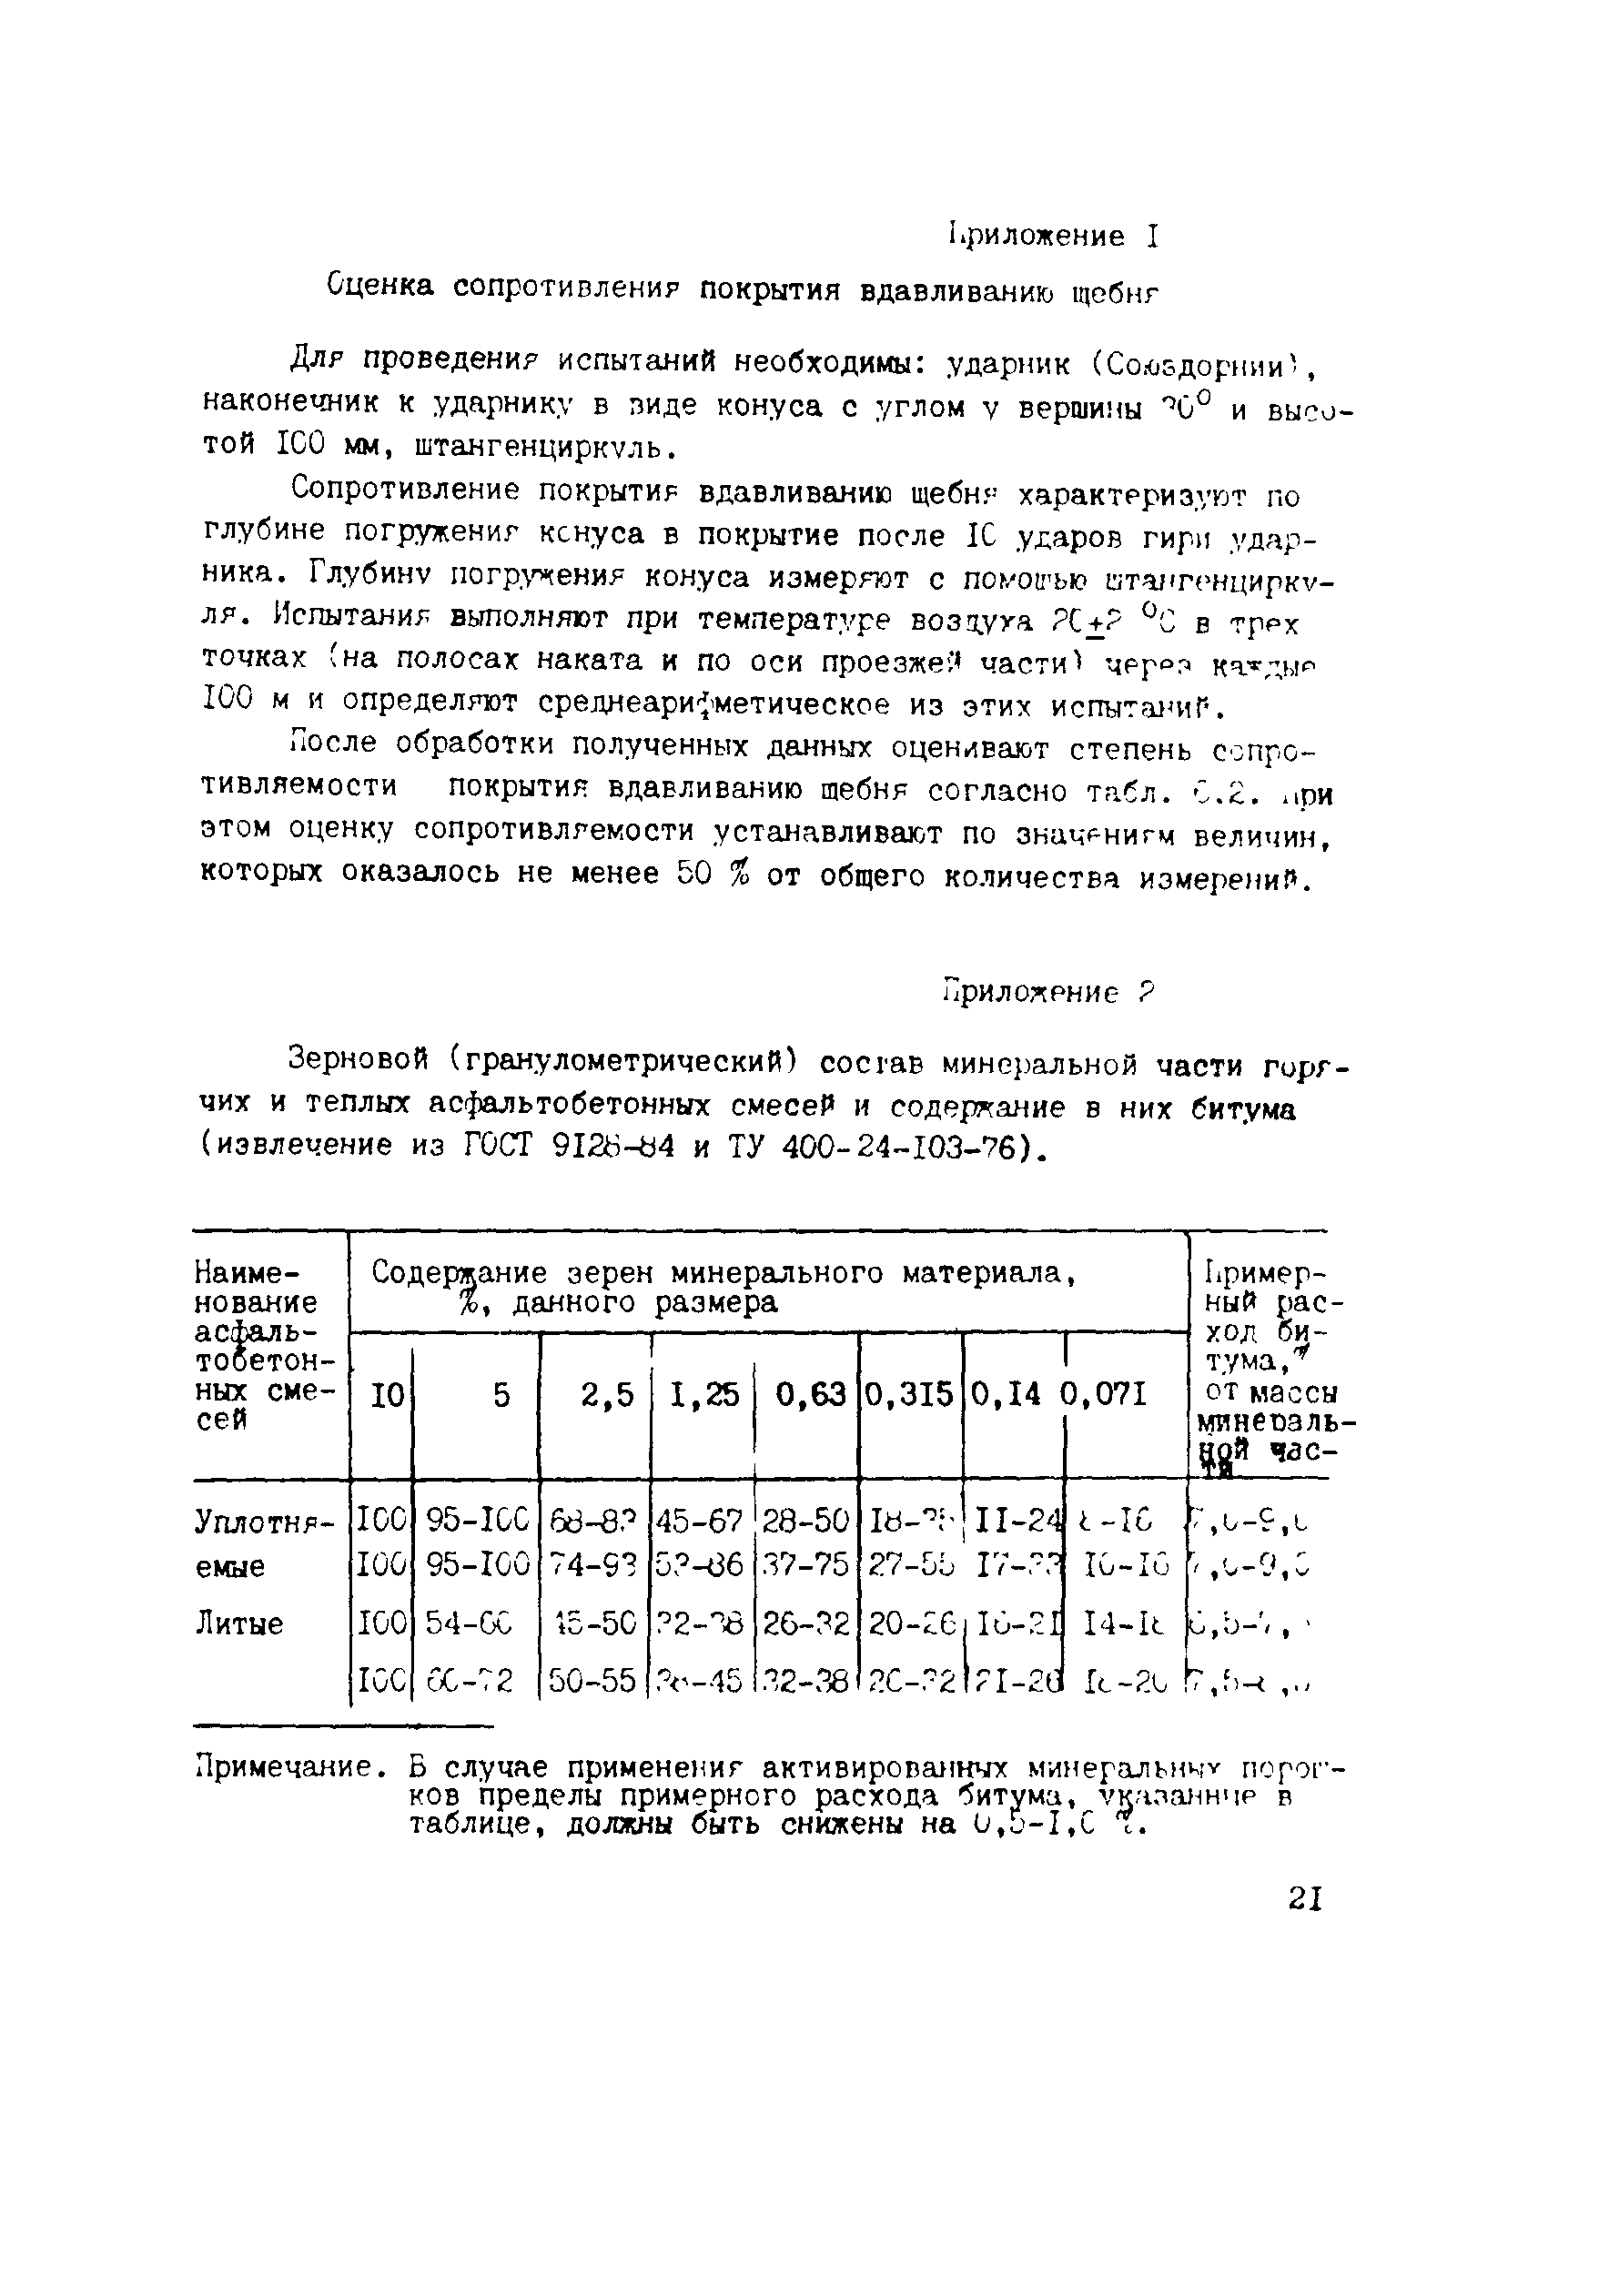 ТУ 218 РСФСР 601-88